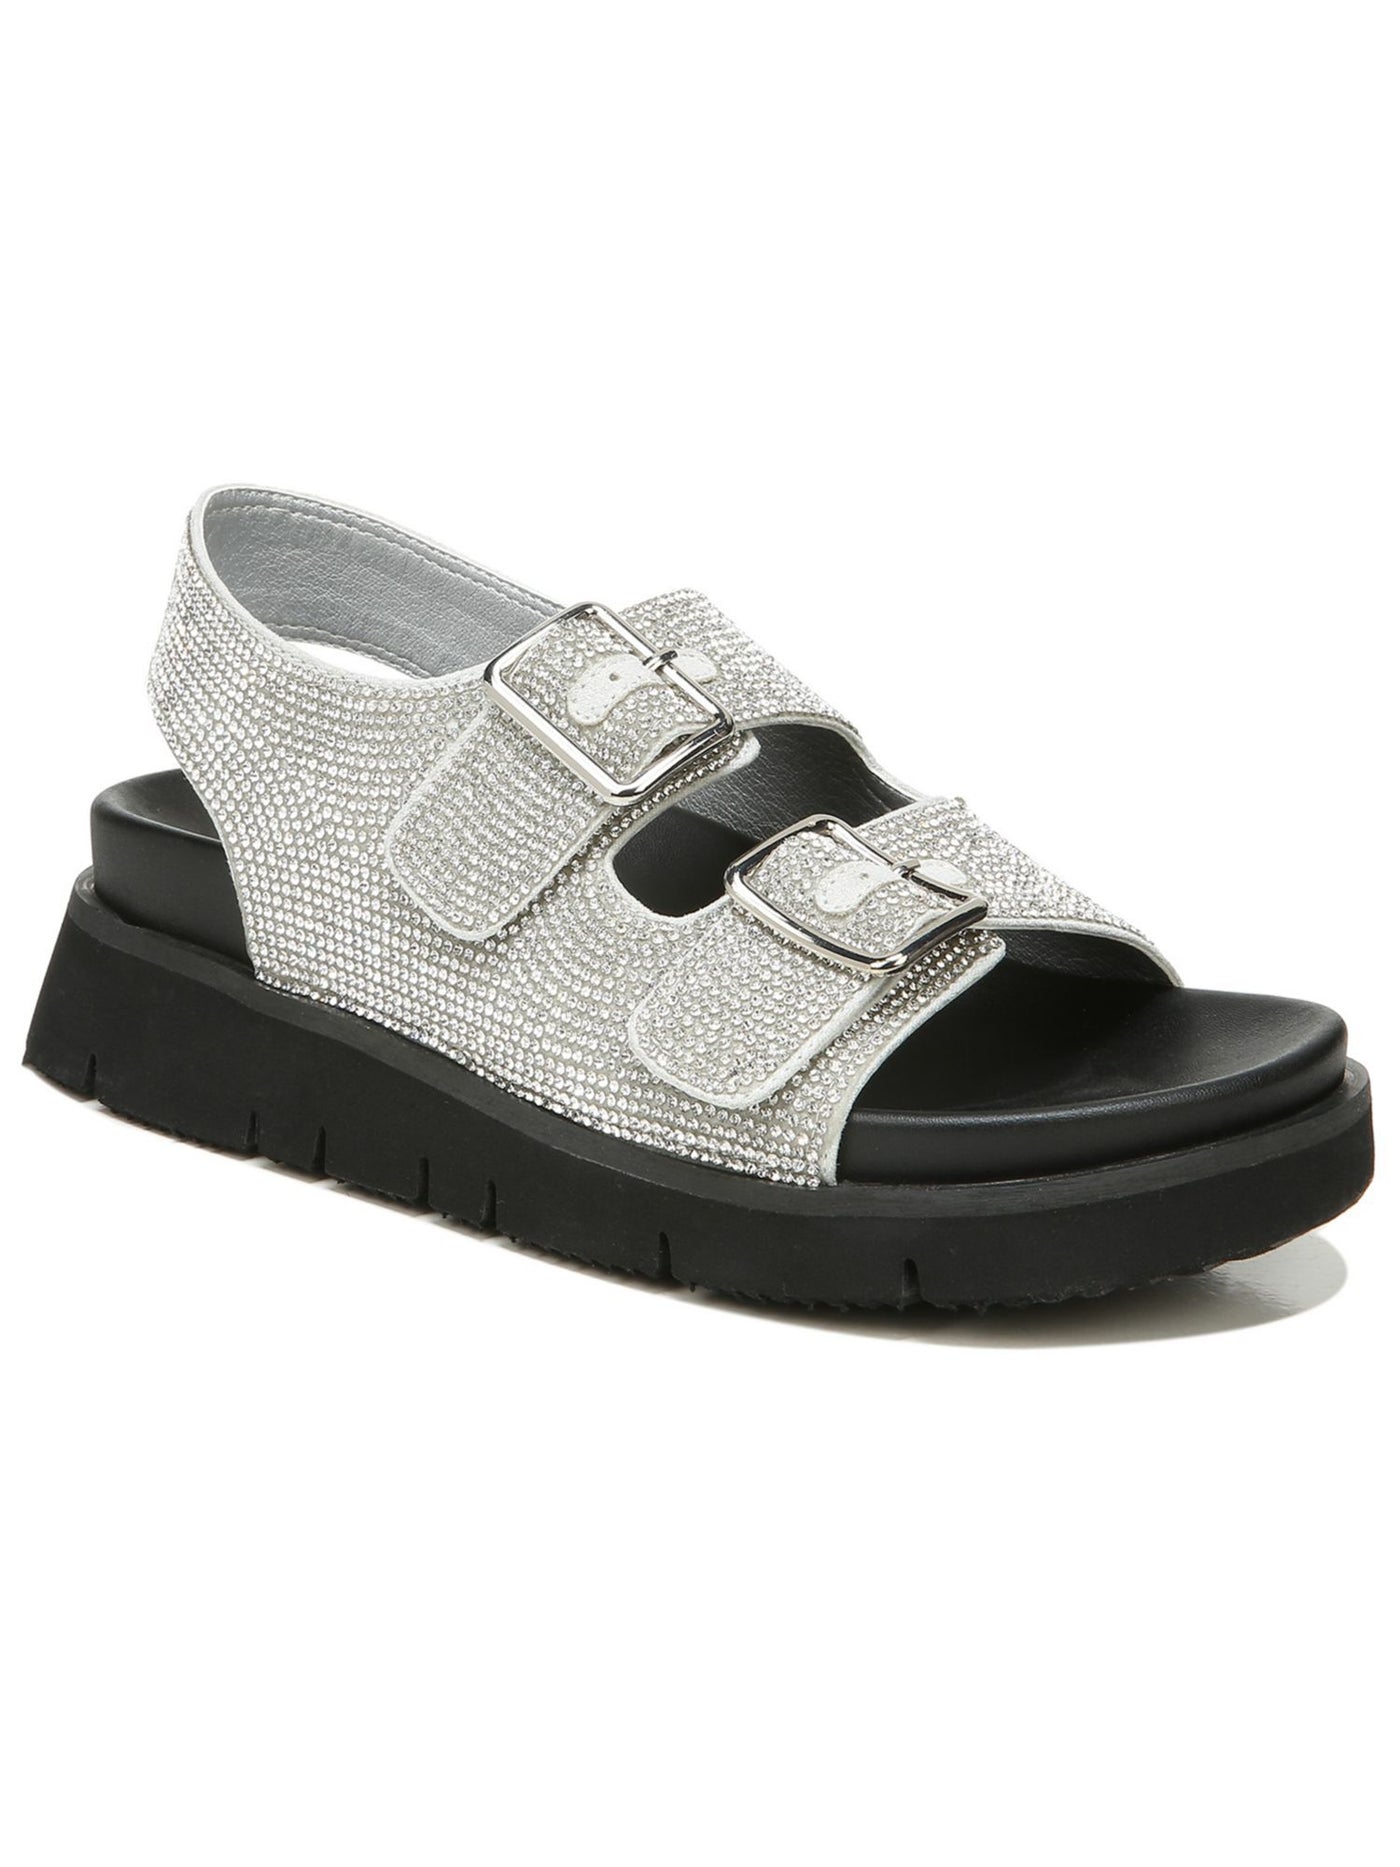 BAR III Womens Silver Sport Embellished Adjustable Kiwi Round Toe Buckle Sandals Shoes 5.5 M